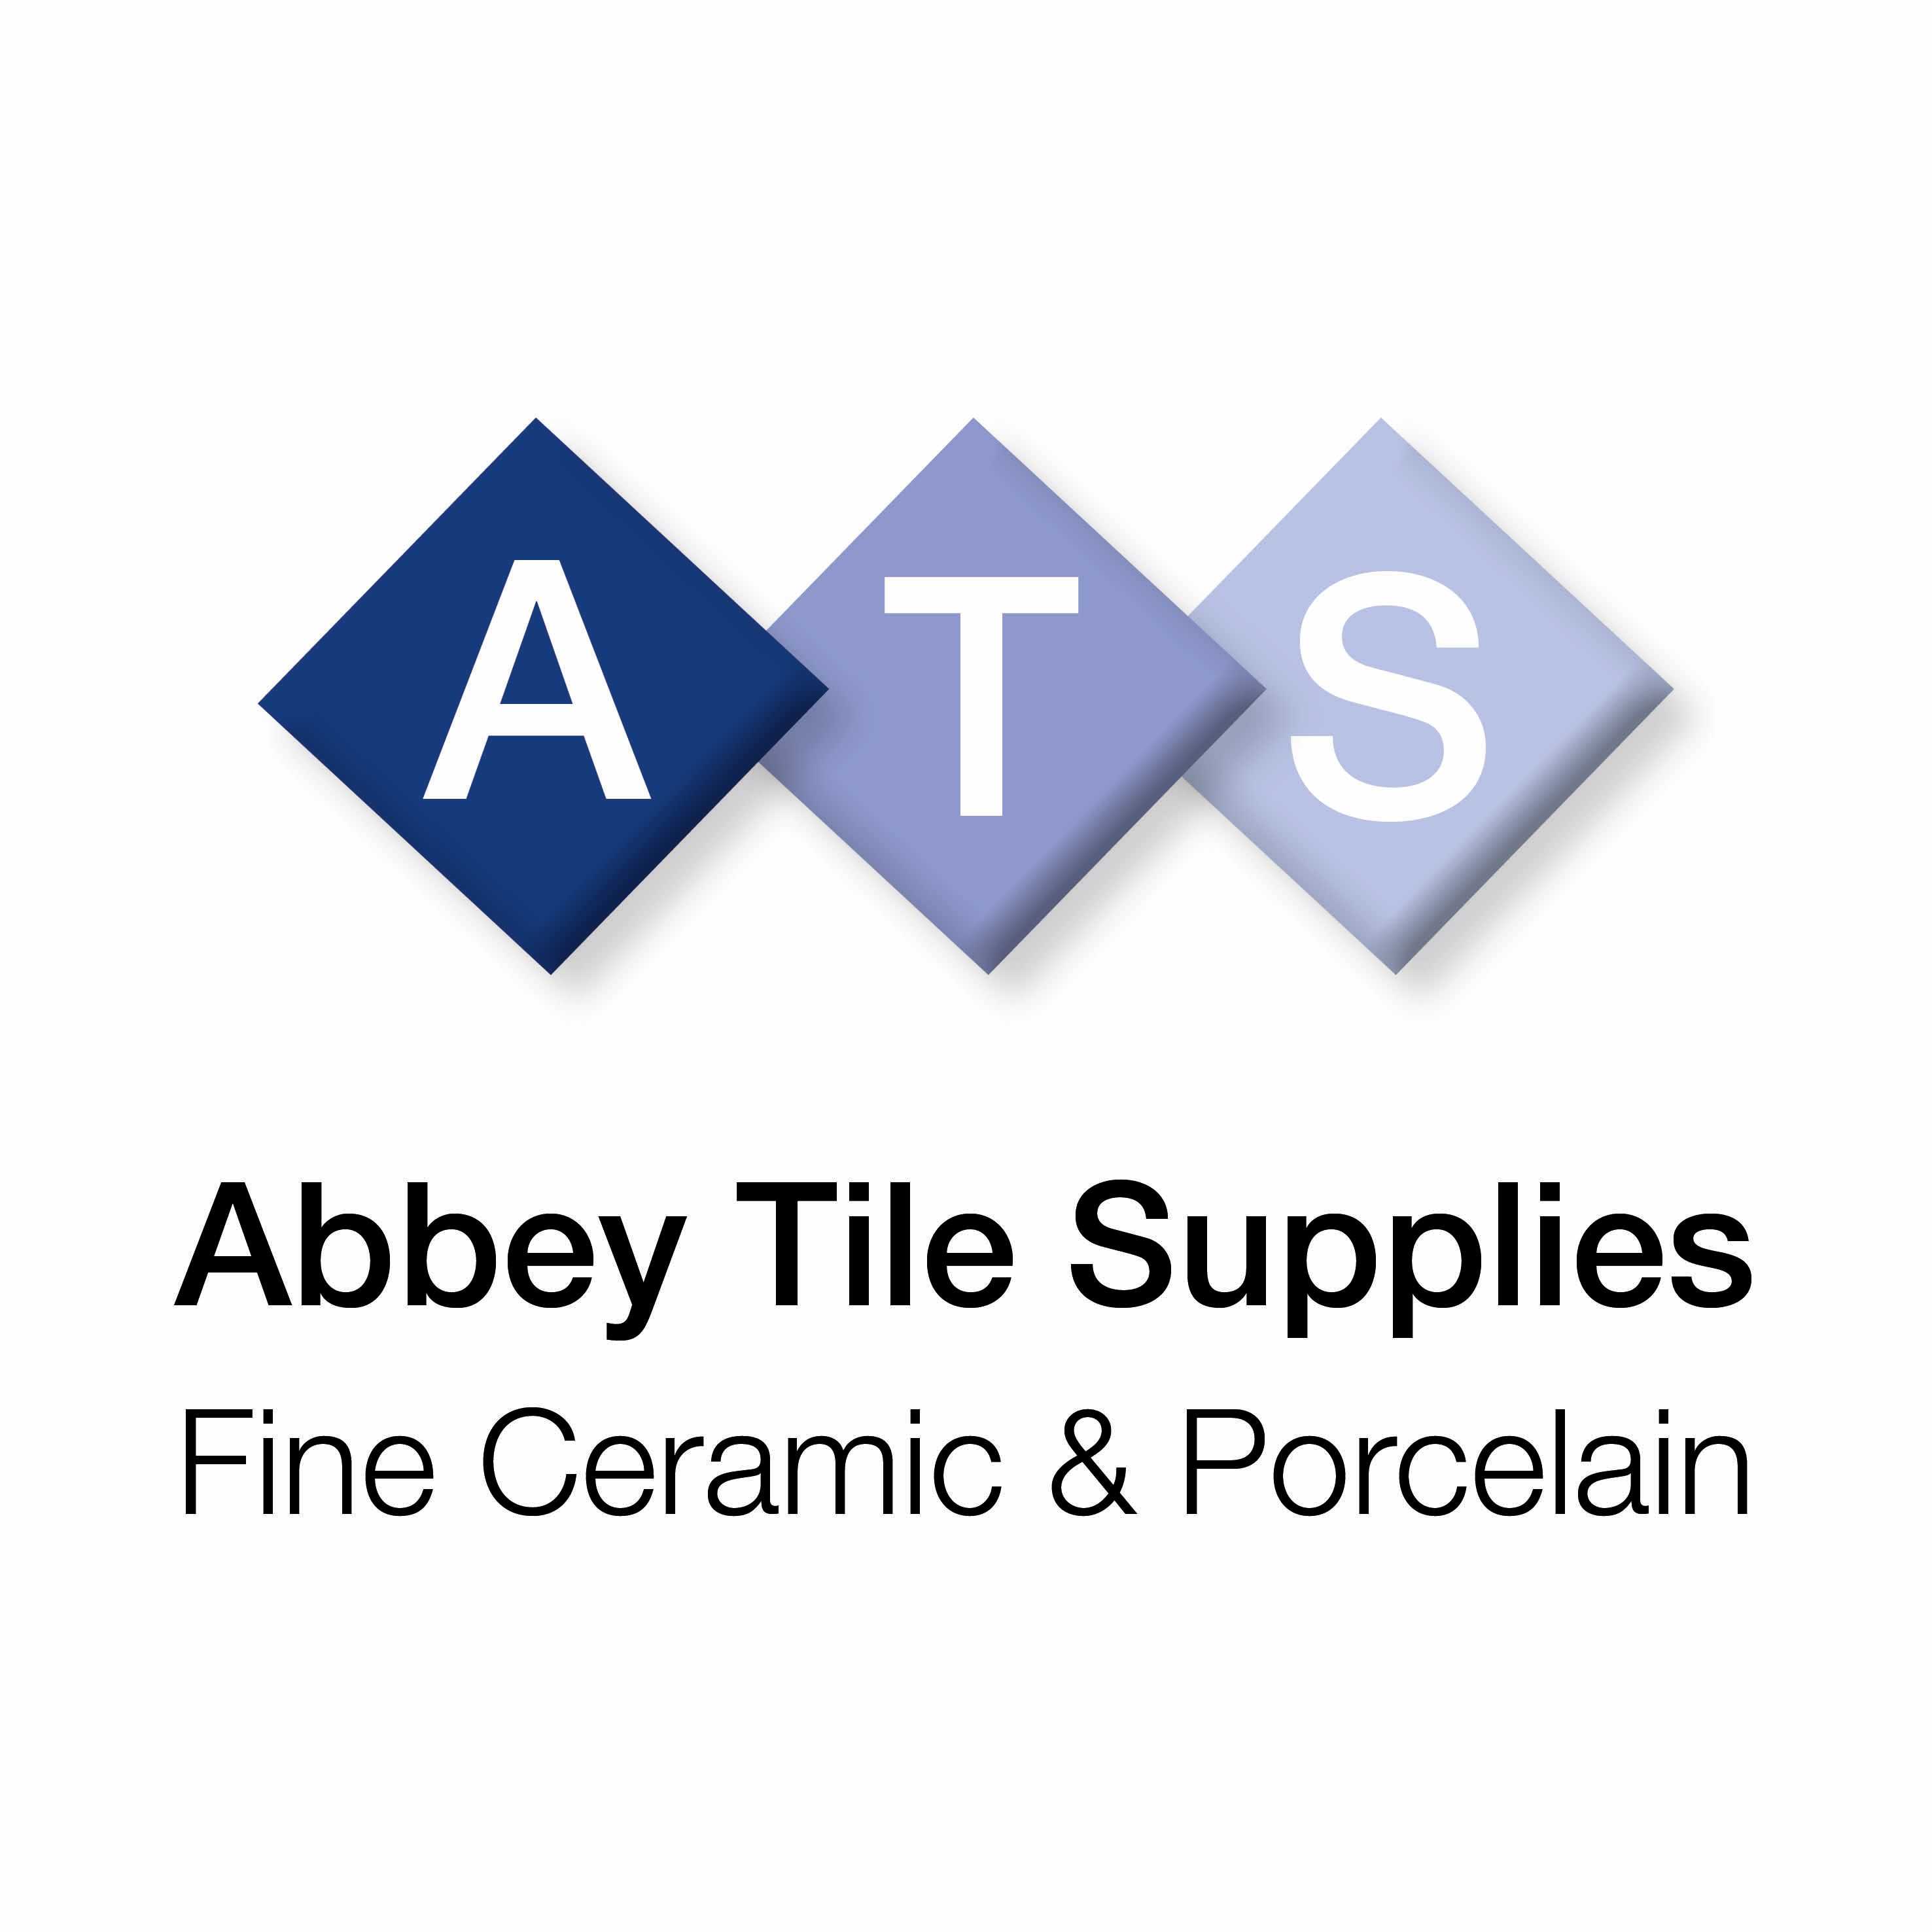 Abbey Tile Supplies Ltd